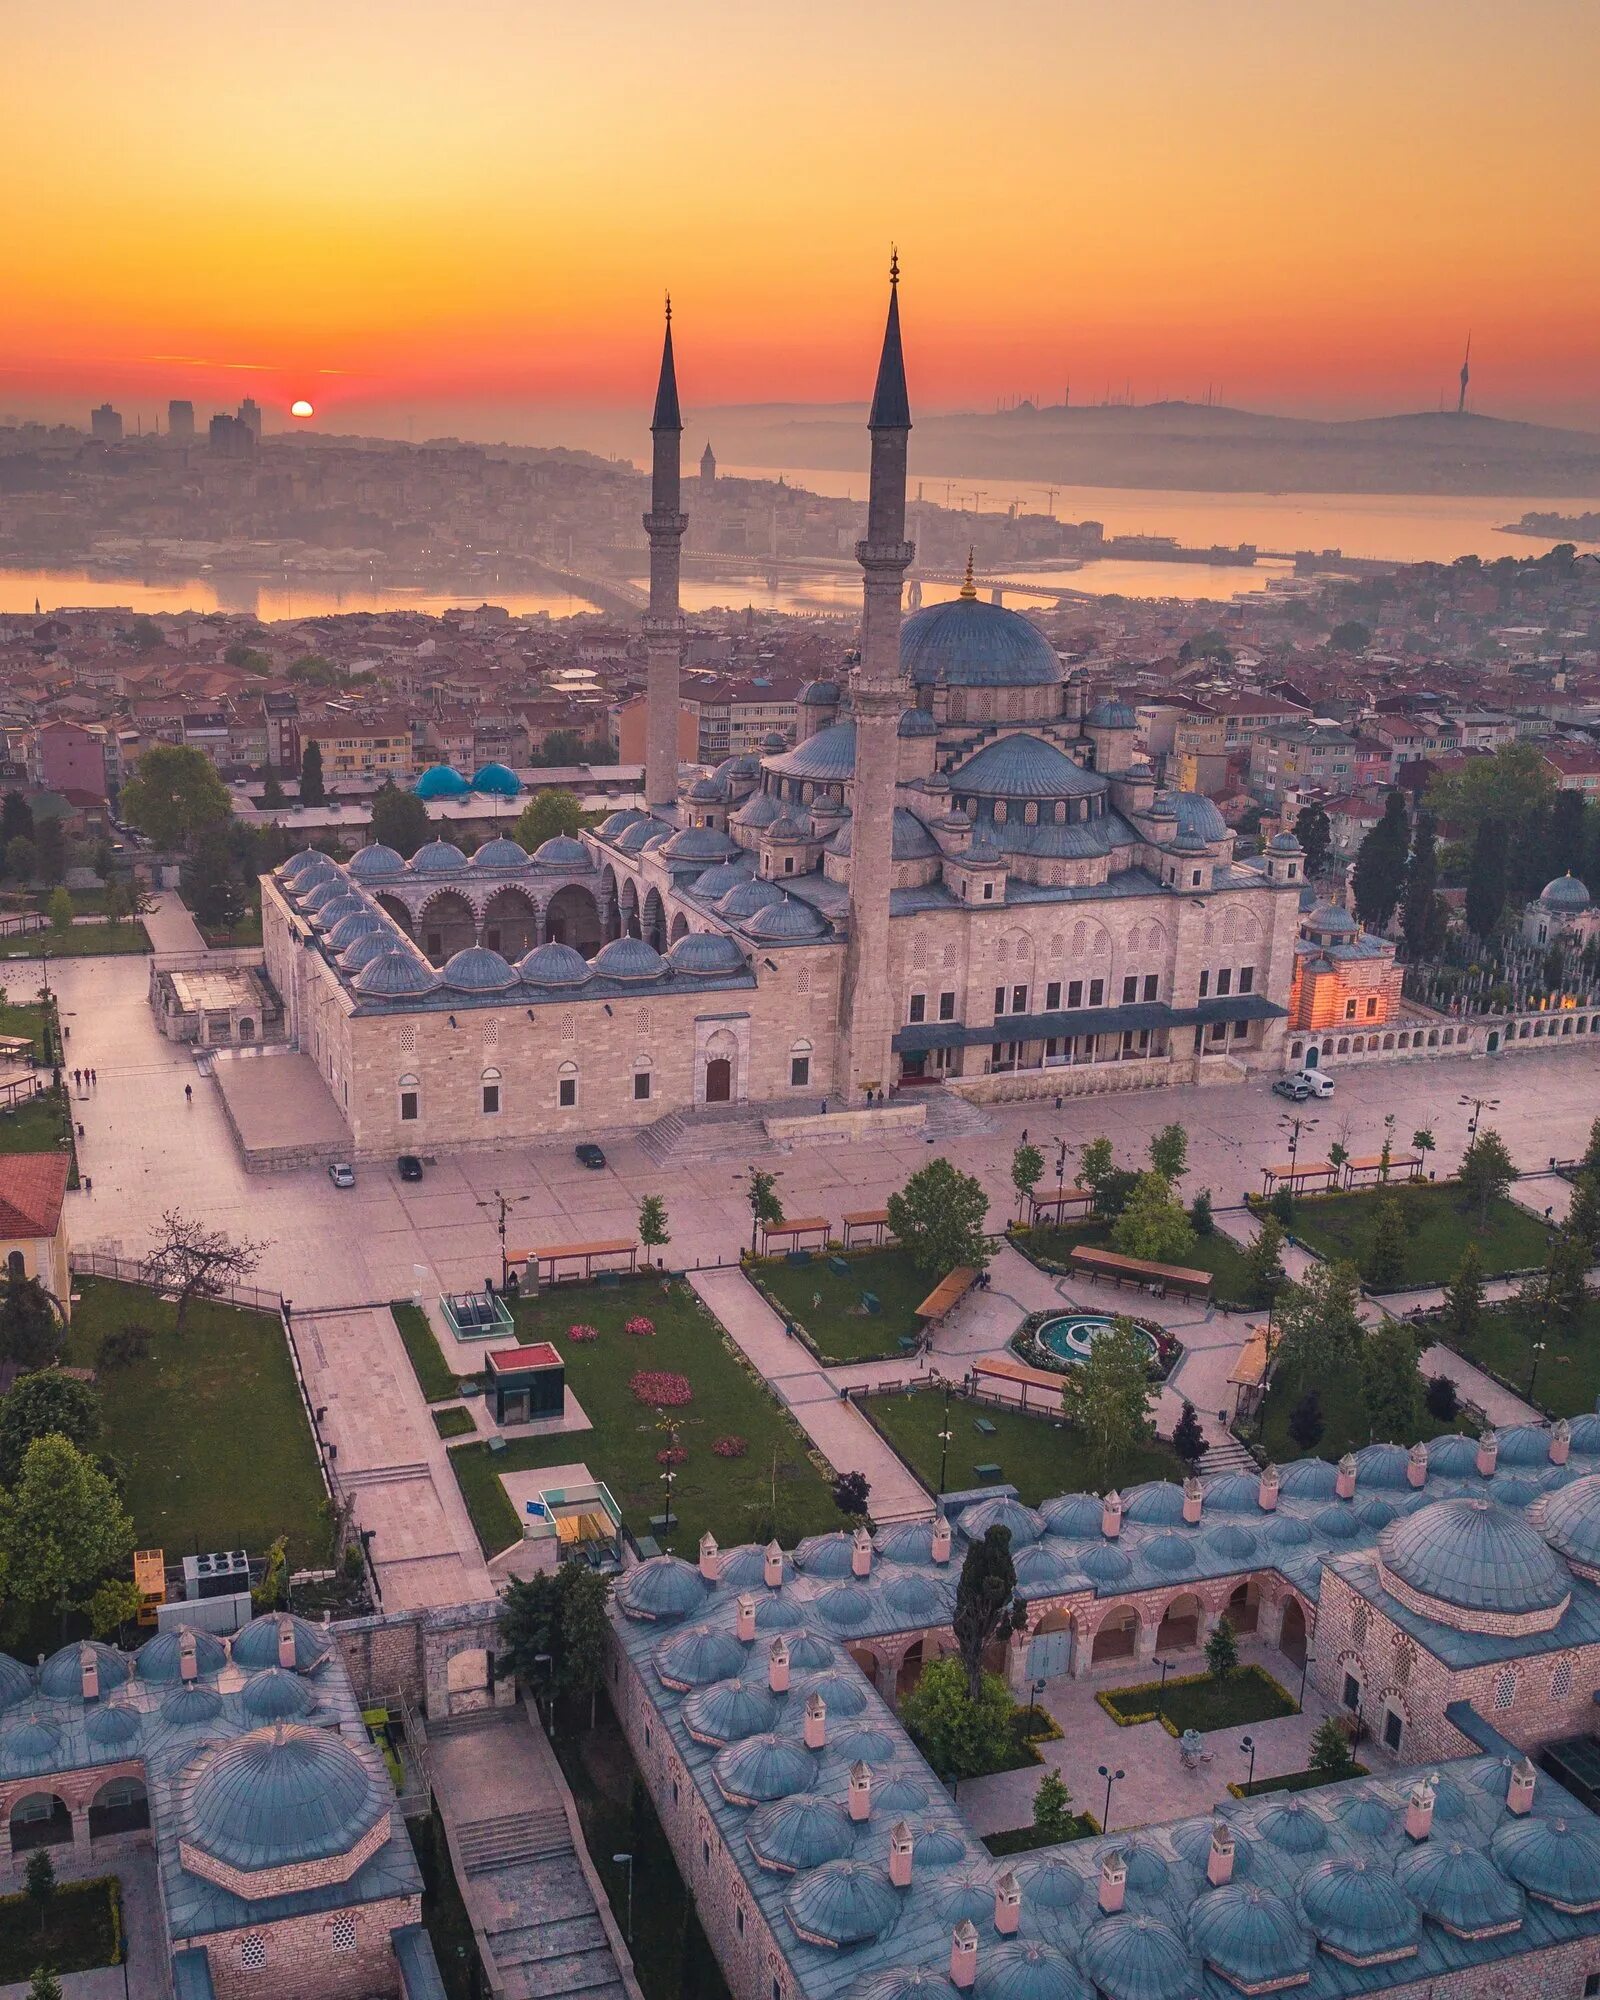 Фатих Стамбул. Стамбул Фатих Султанахмет. Султанахмет (район Фатих). Турецкие мечети в Стамбуле Фатих.